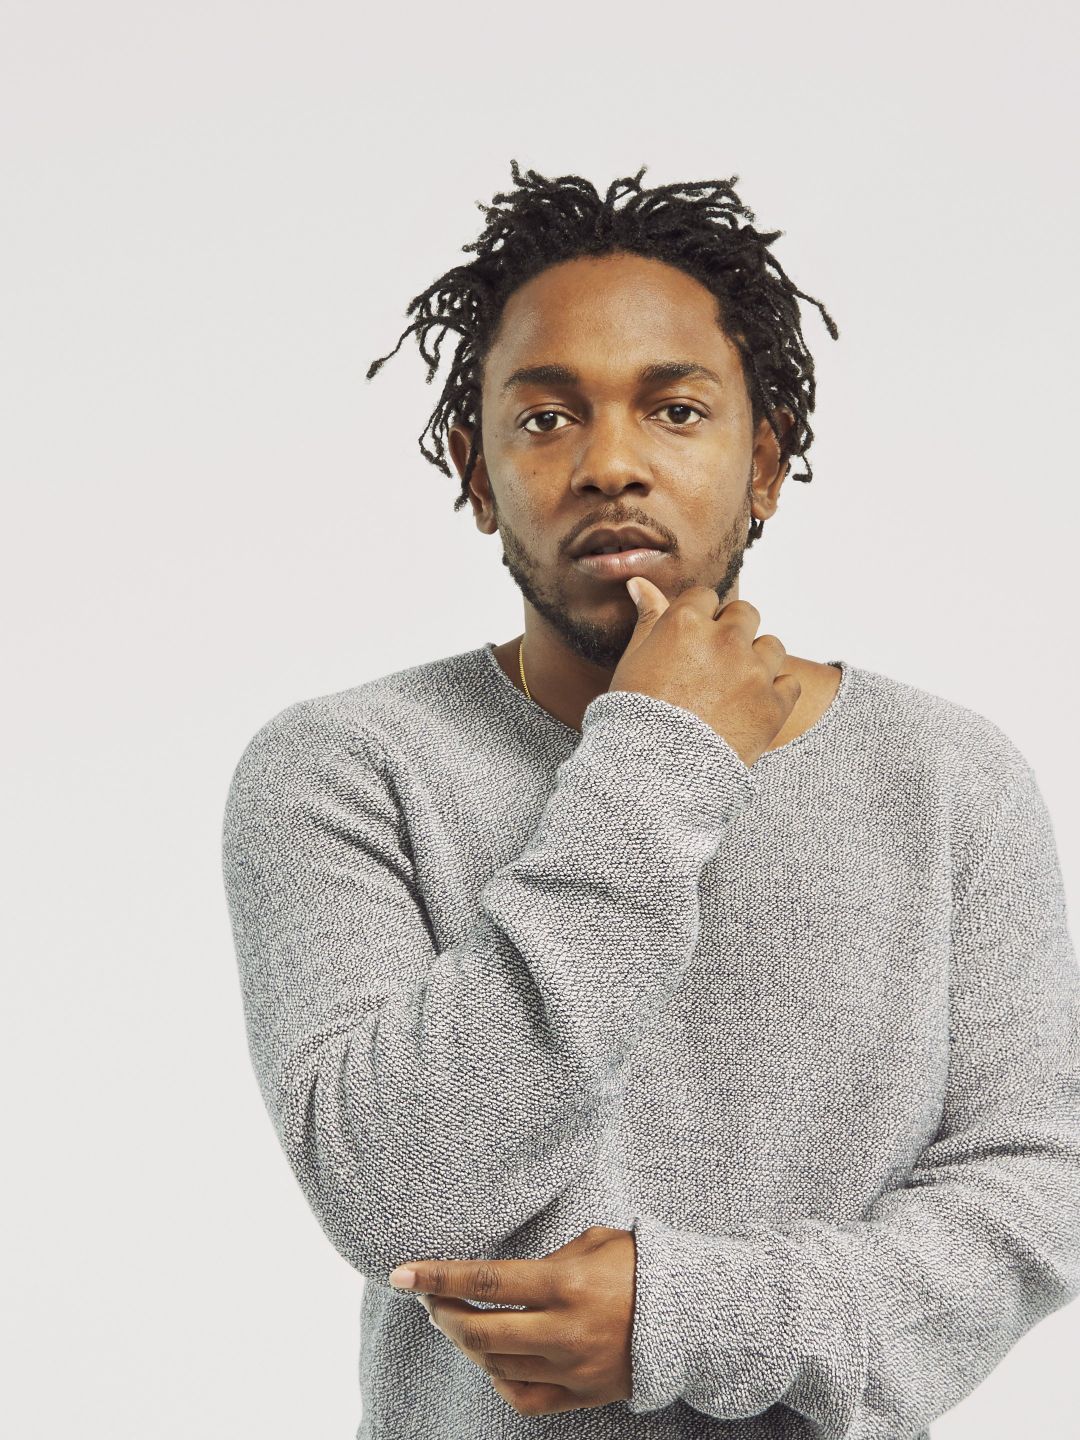 Kendrick Lamar relationship